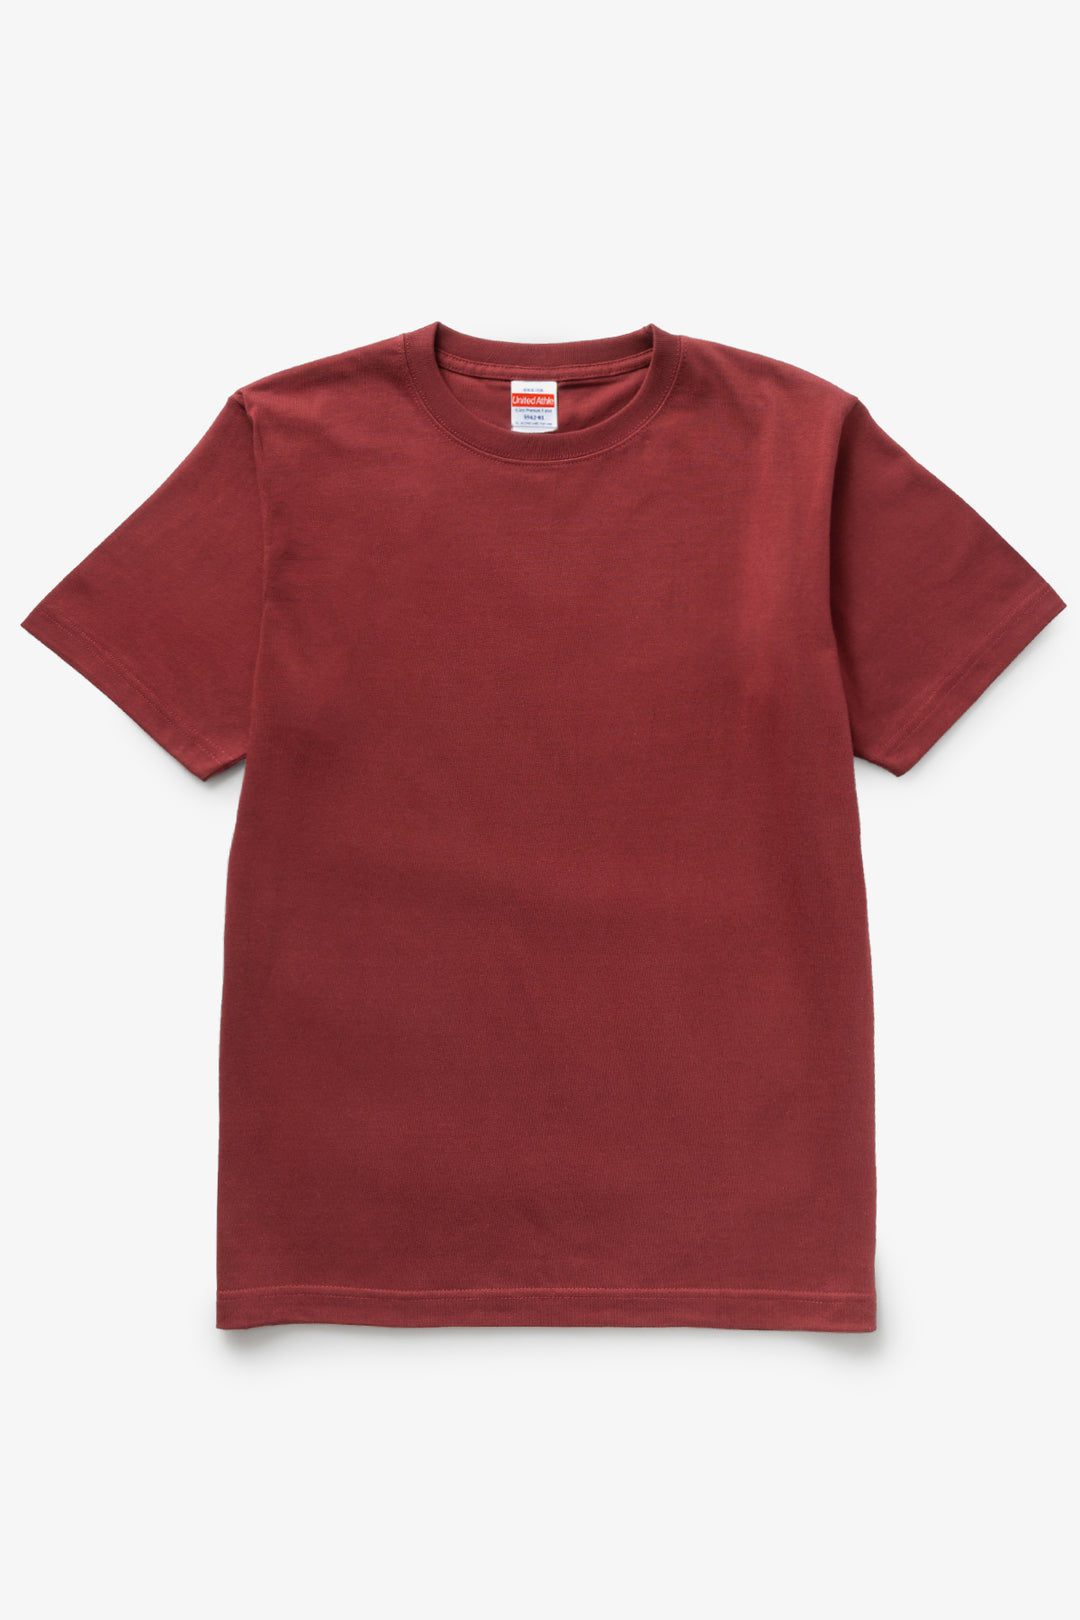 United Athle - 5942 6.2oz Premium T-Shirt - Burgundy